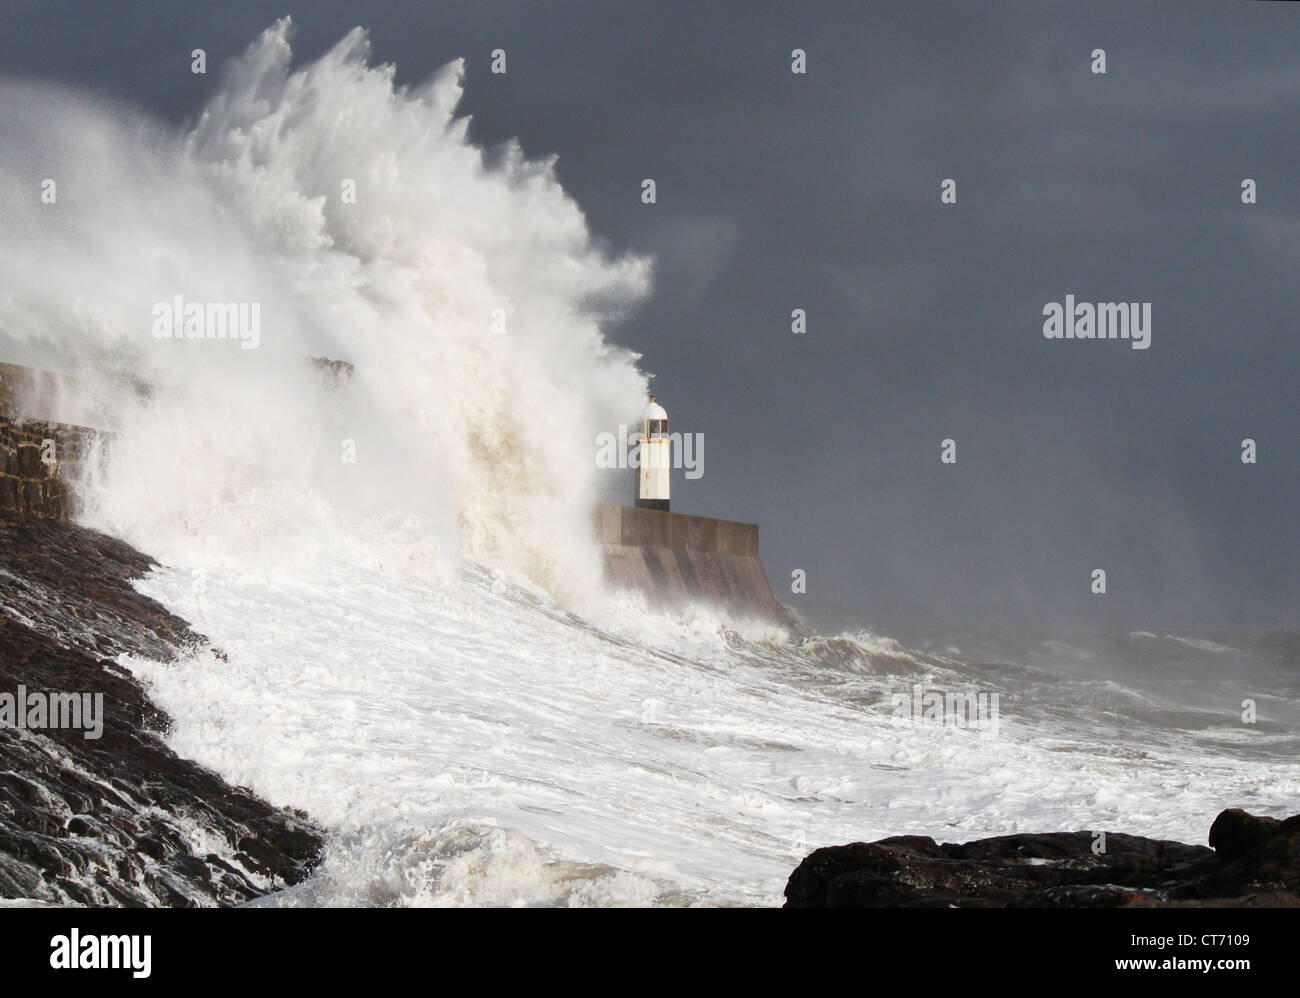 Uragano Katia hits Wales UK costa onde massiccia Foto Stock